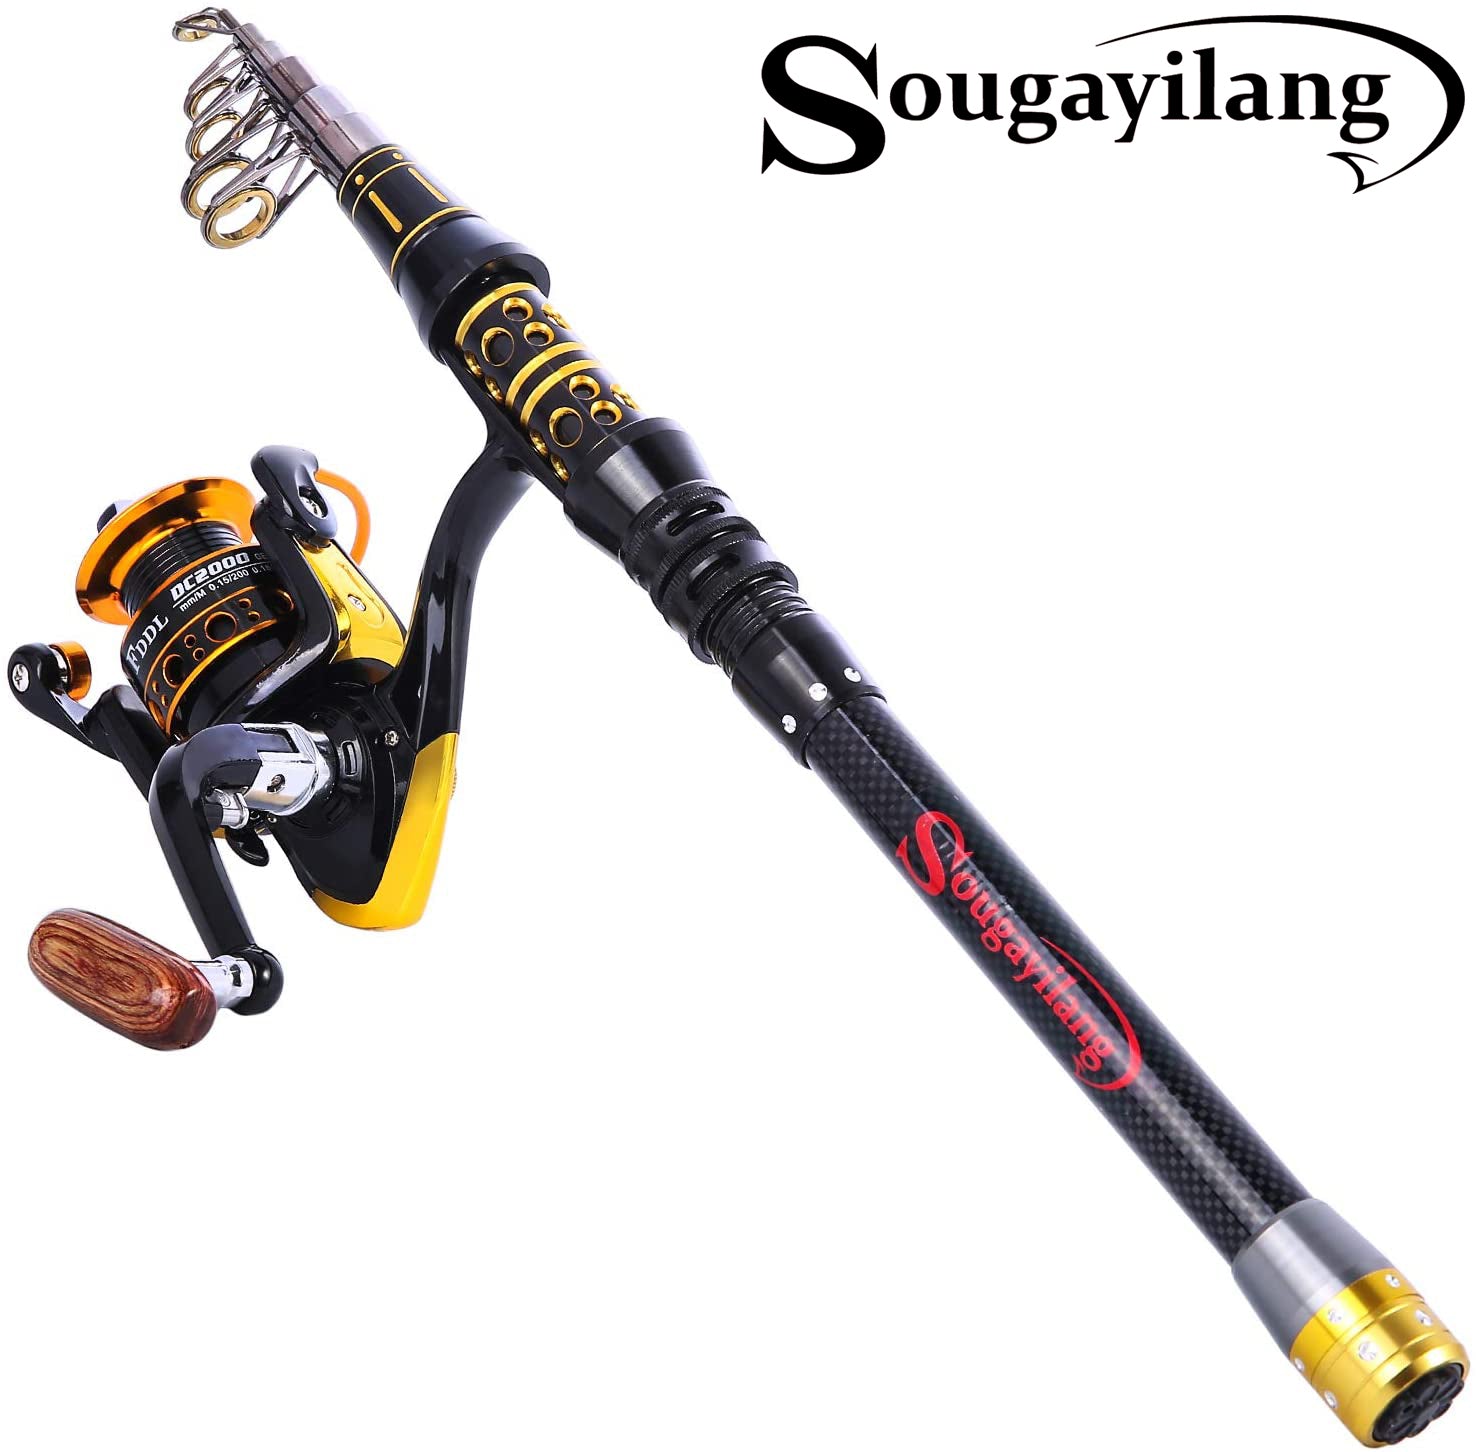 Sougayilang Kids Fishing Pole Telescopic Fishing Rod and Reel Combo 